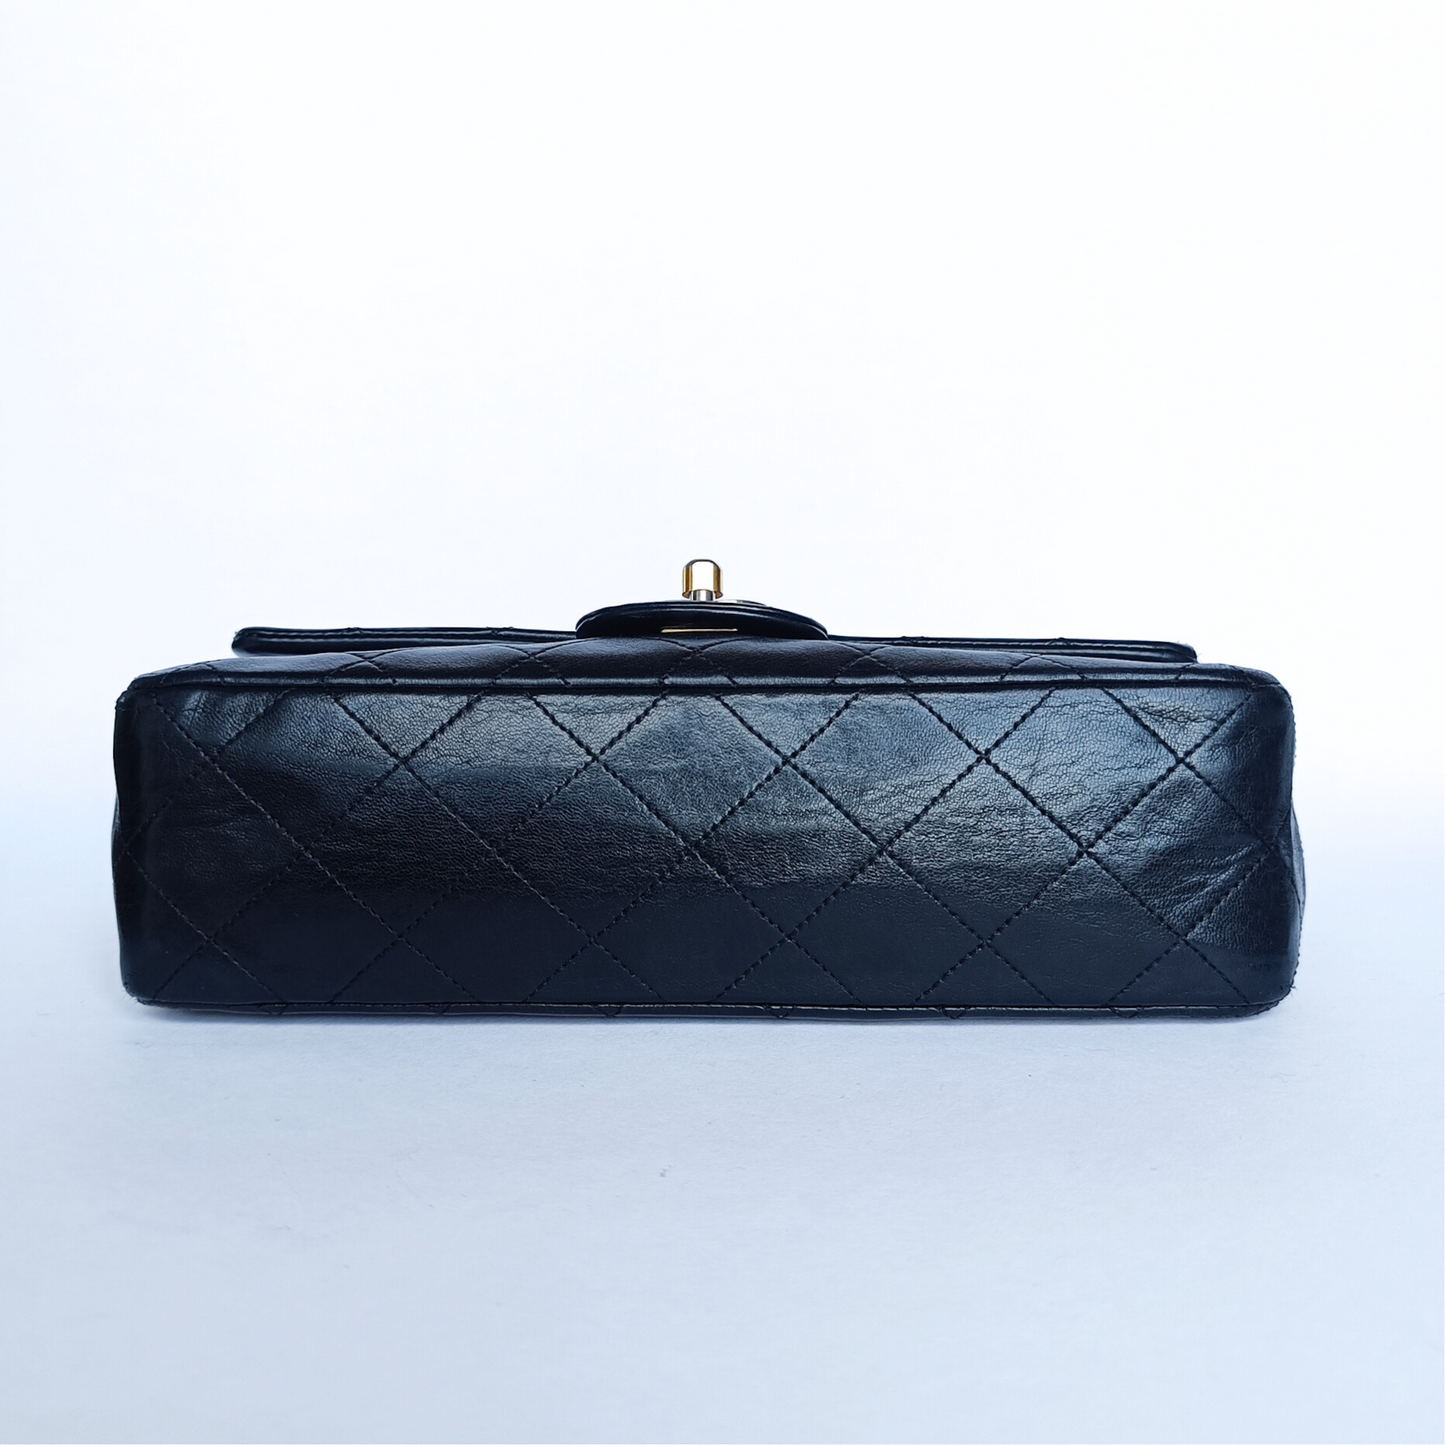 Chanel Chanel Klassinen kaksinkertainen Flap Bag Pieni lampaannahka - Olkalaukku - Etoile Luxury Vintage